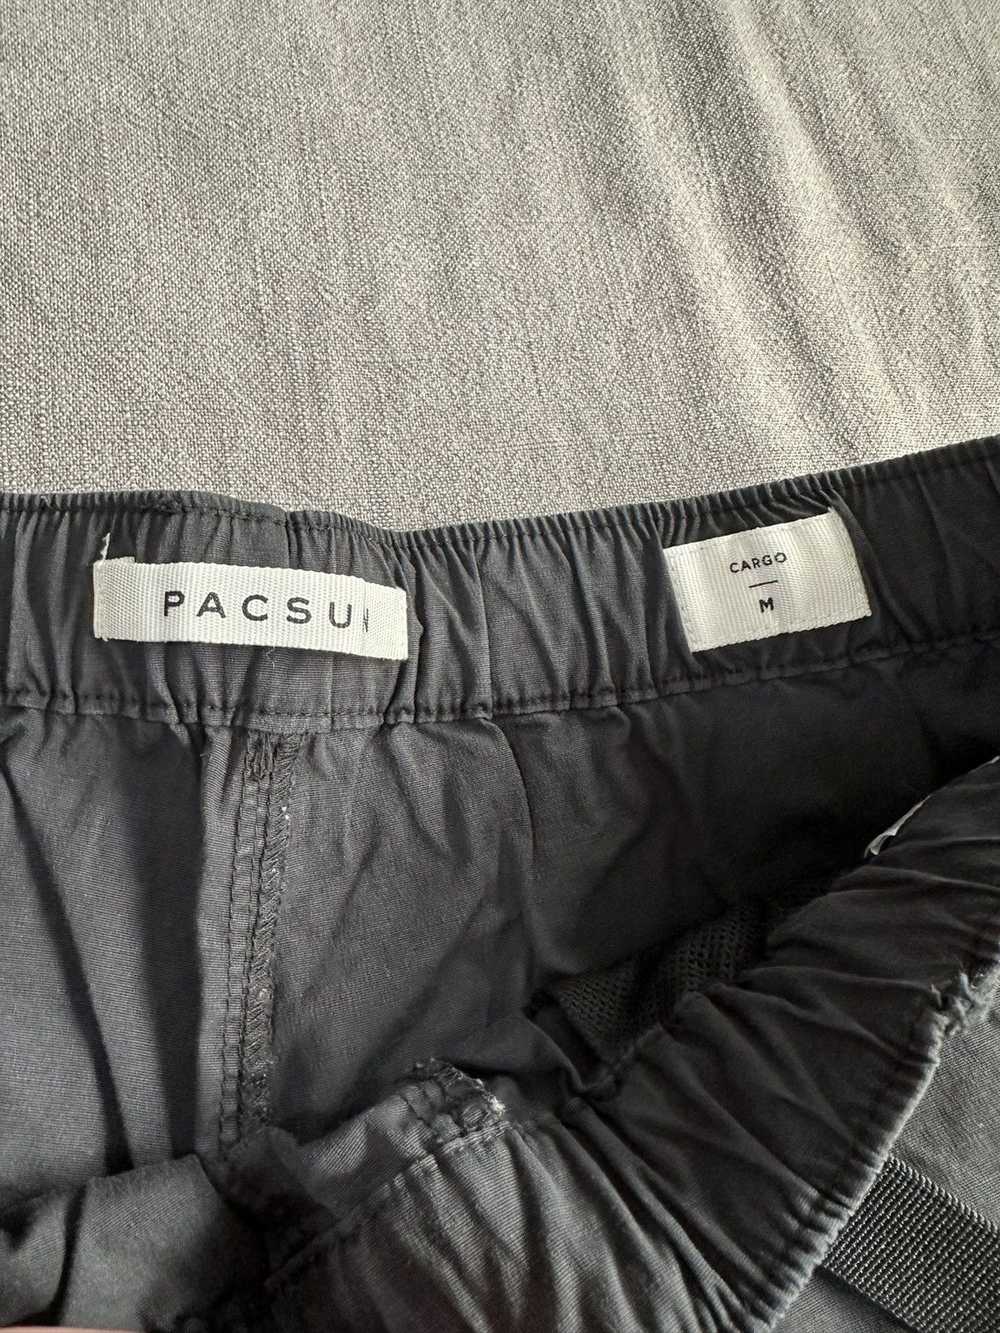 Pacsun Black Cargo Pacsun Shorts Medium - image 2